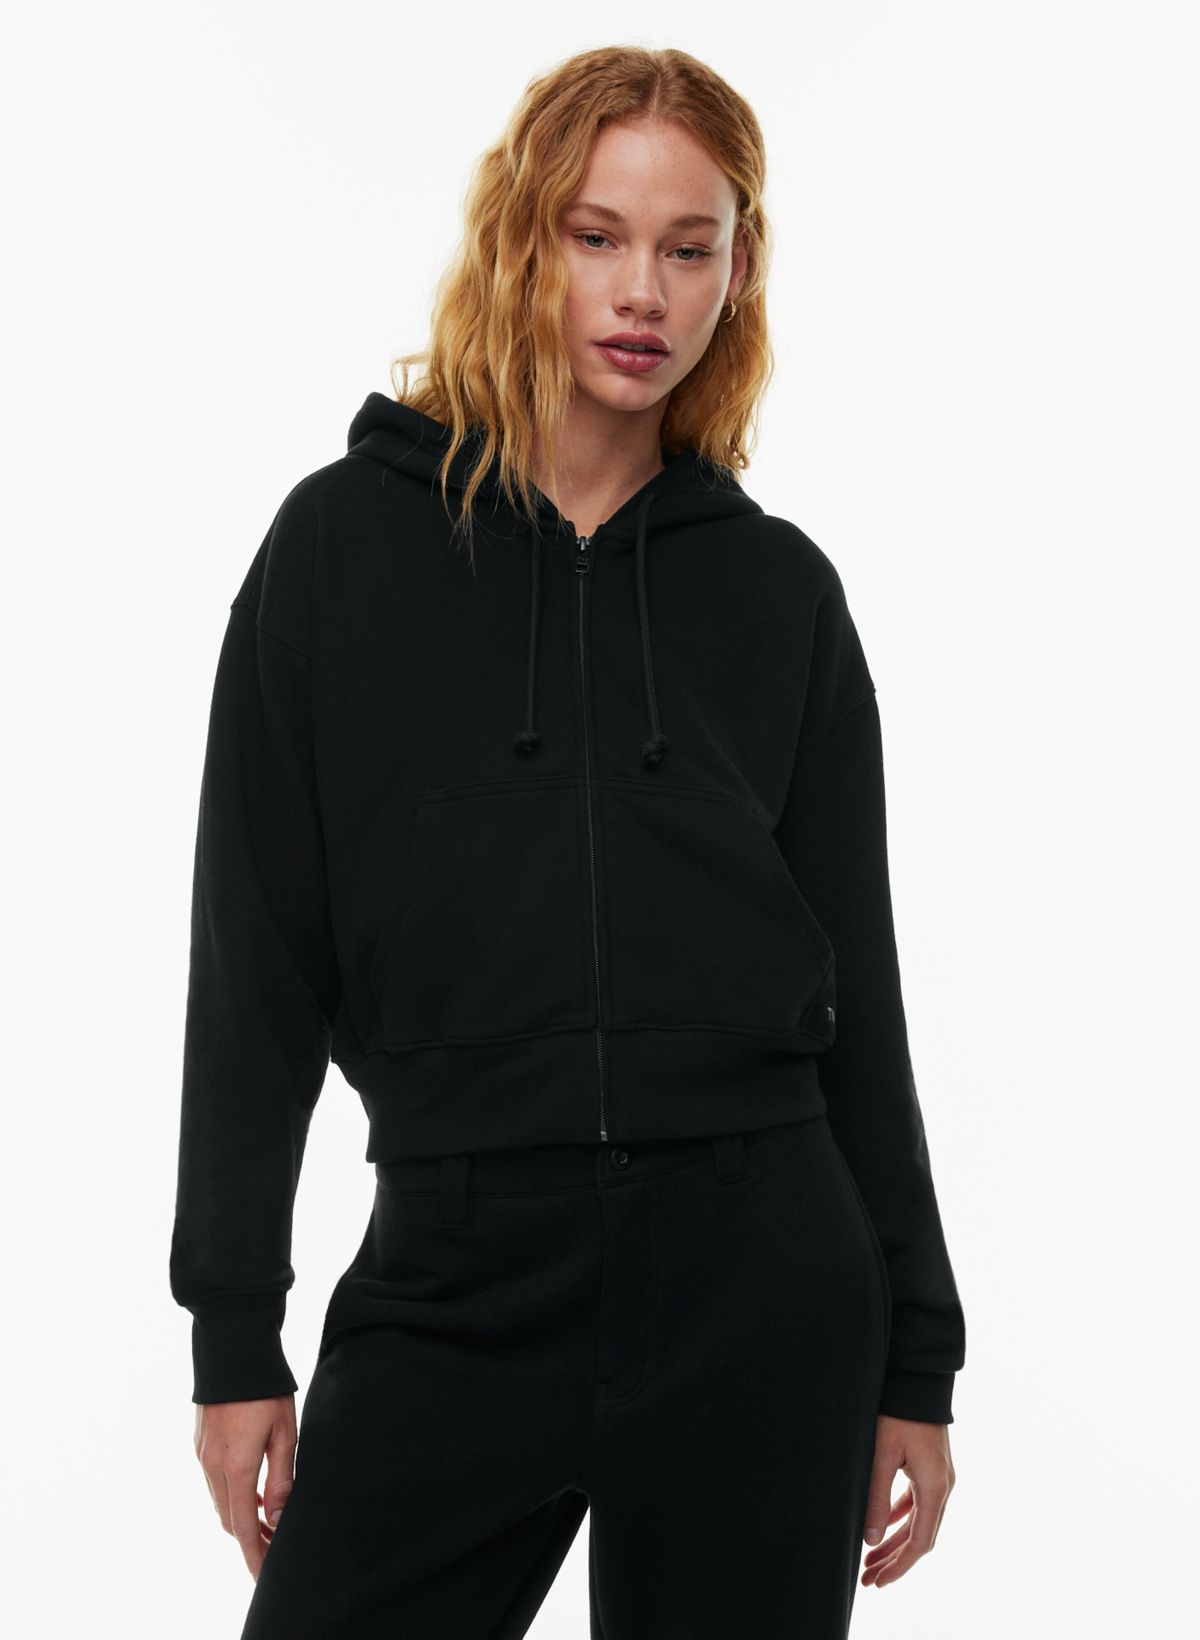 BC Clothing zip up hoodie sweatshirt fleece lined warm size large women's